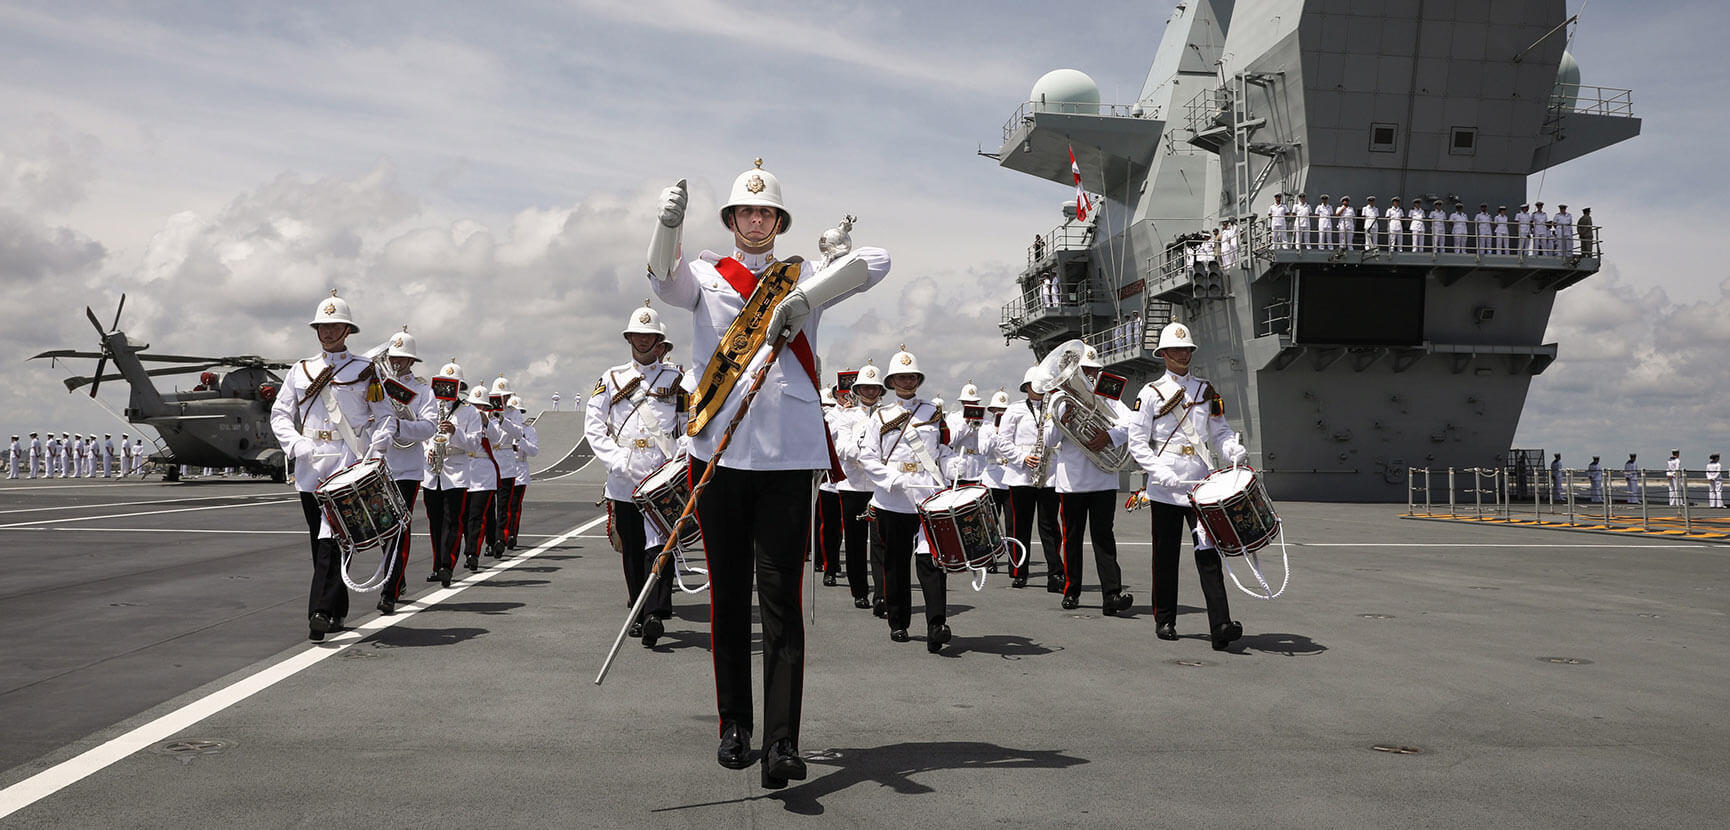 HMS Queen Elizabeth Westlant 18 deployment – Part 1